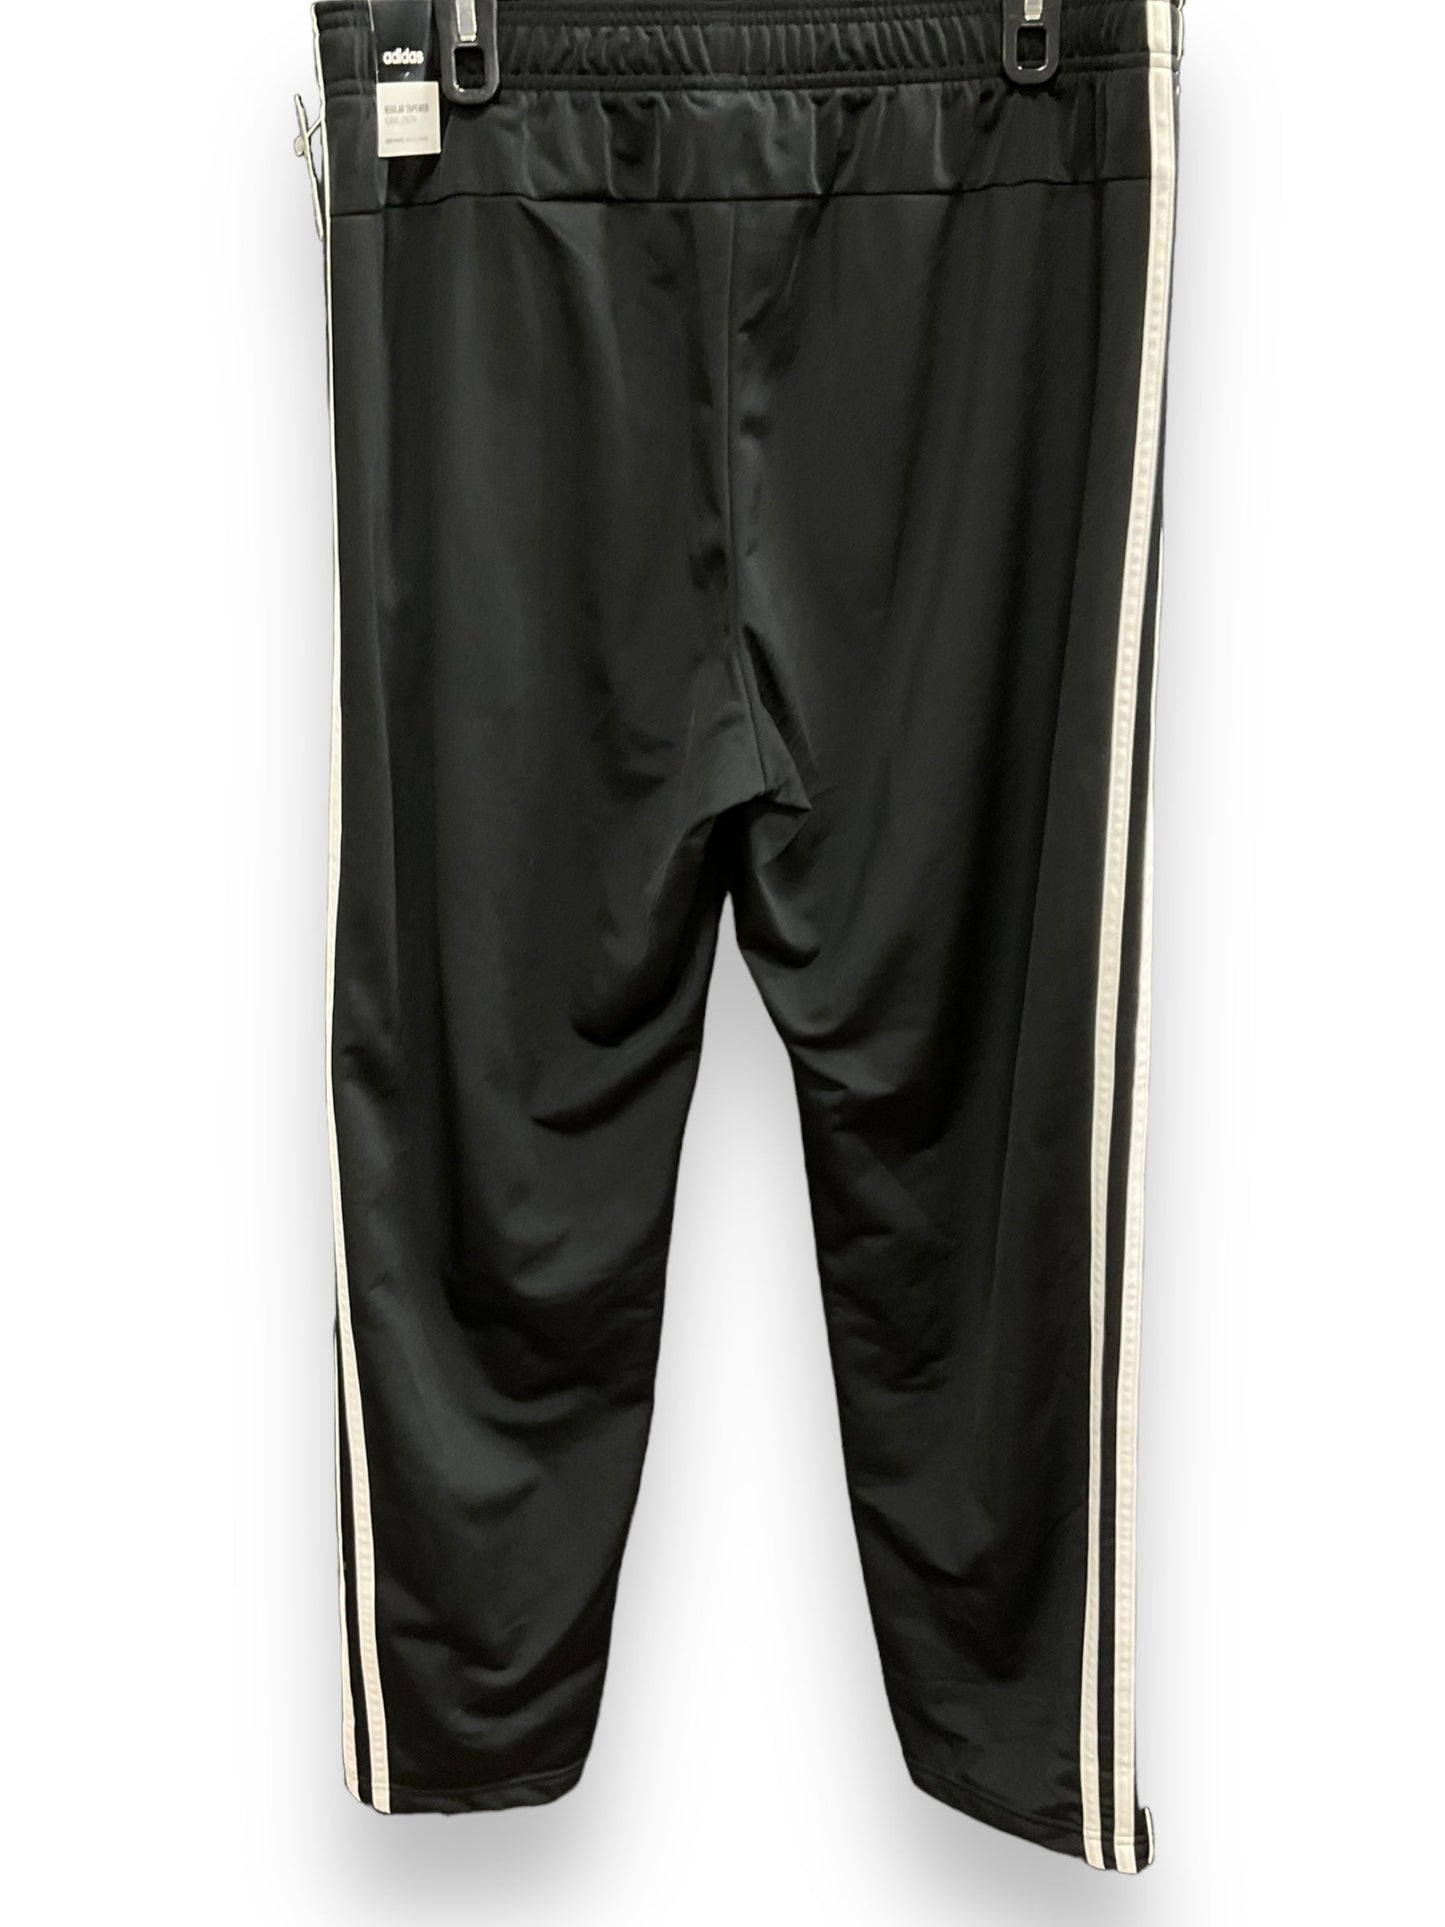 Black Athletic Pants Adidas, Size Xl